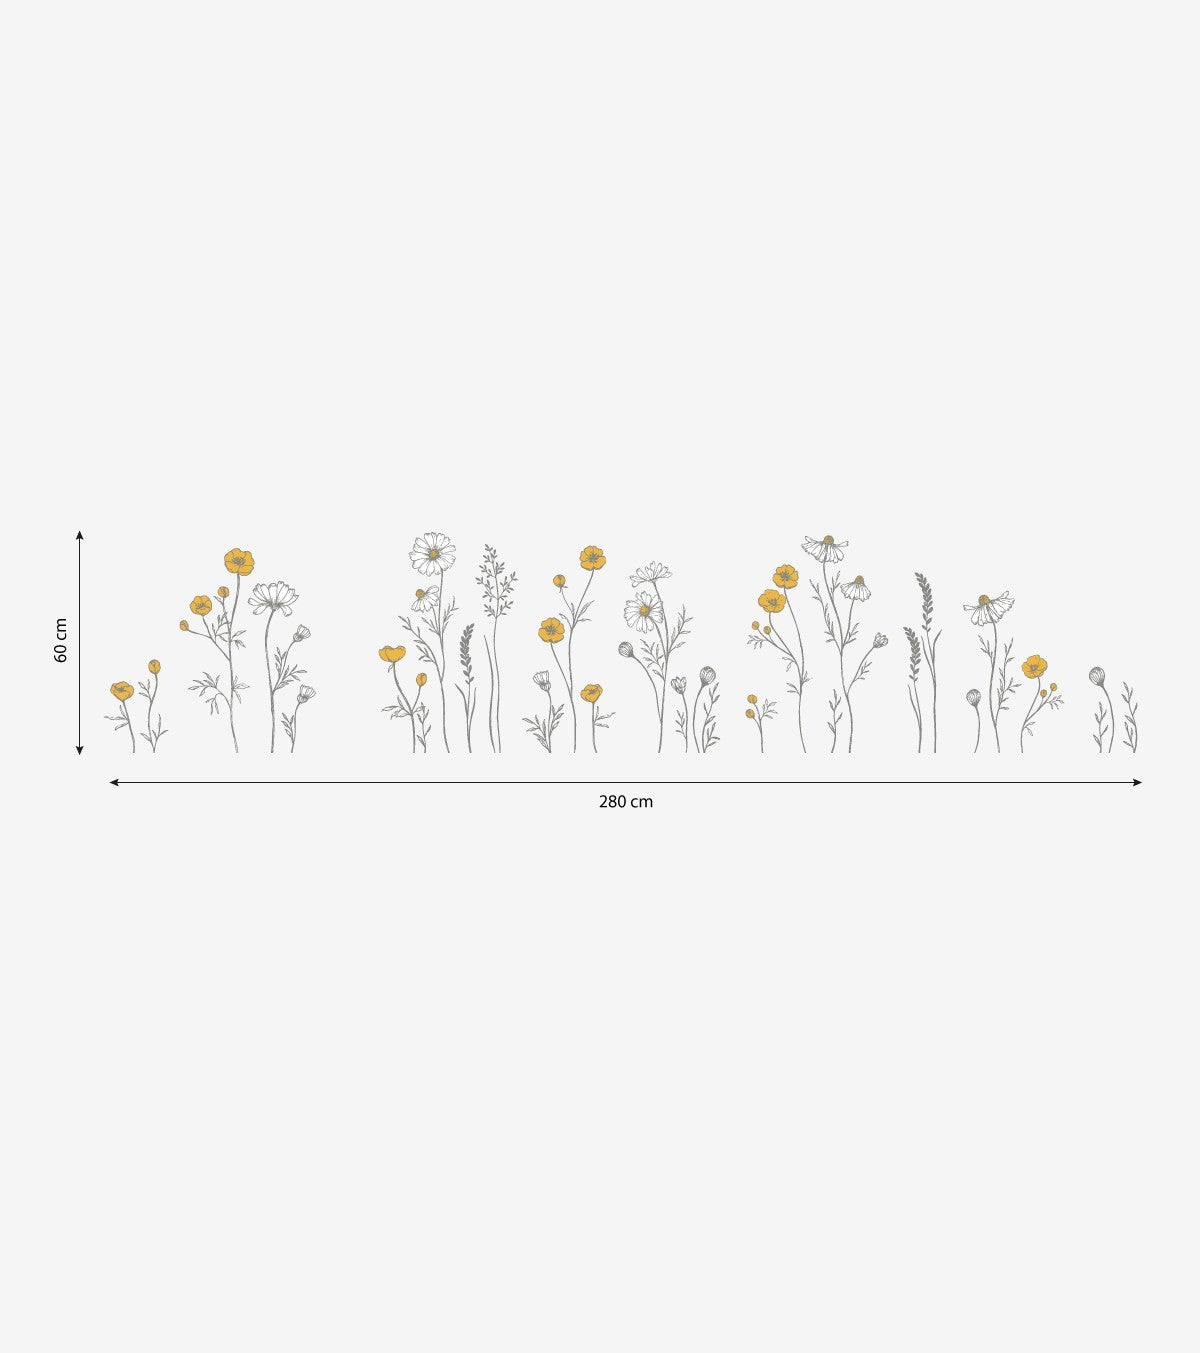 CHAMOMILE - Stickers muraux - Grandes fleurs de Camomille